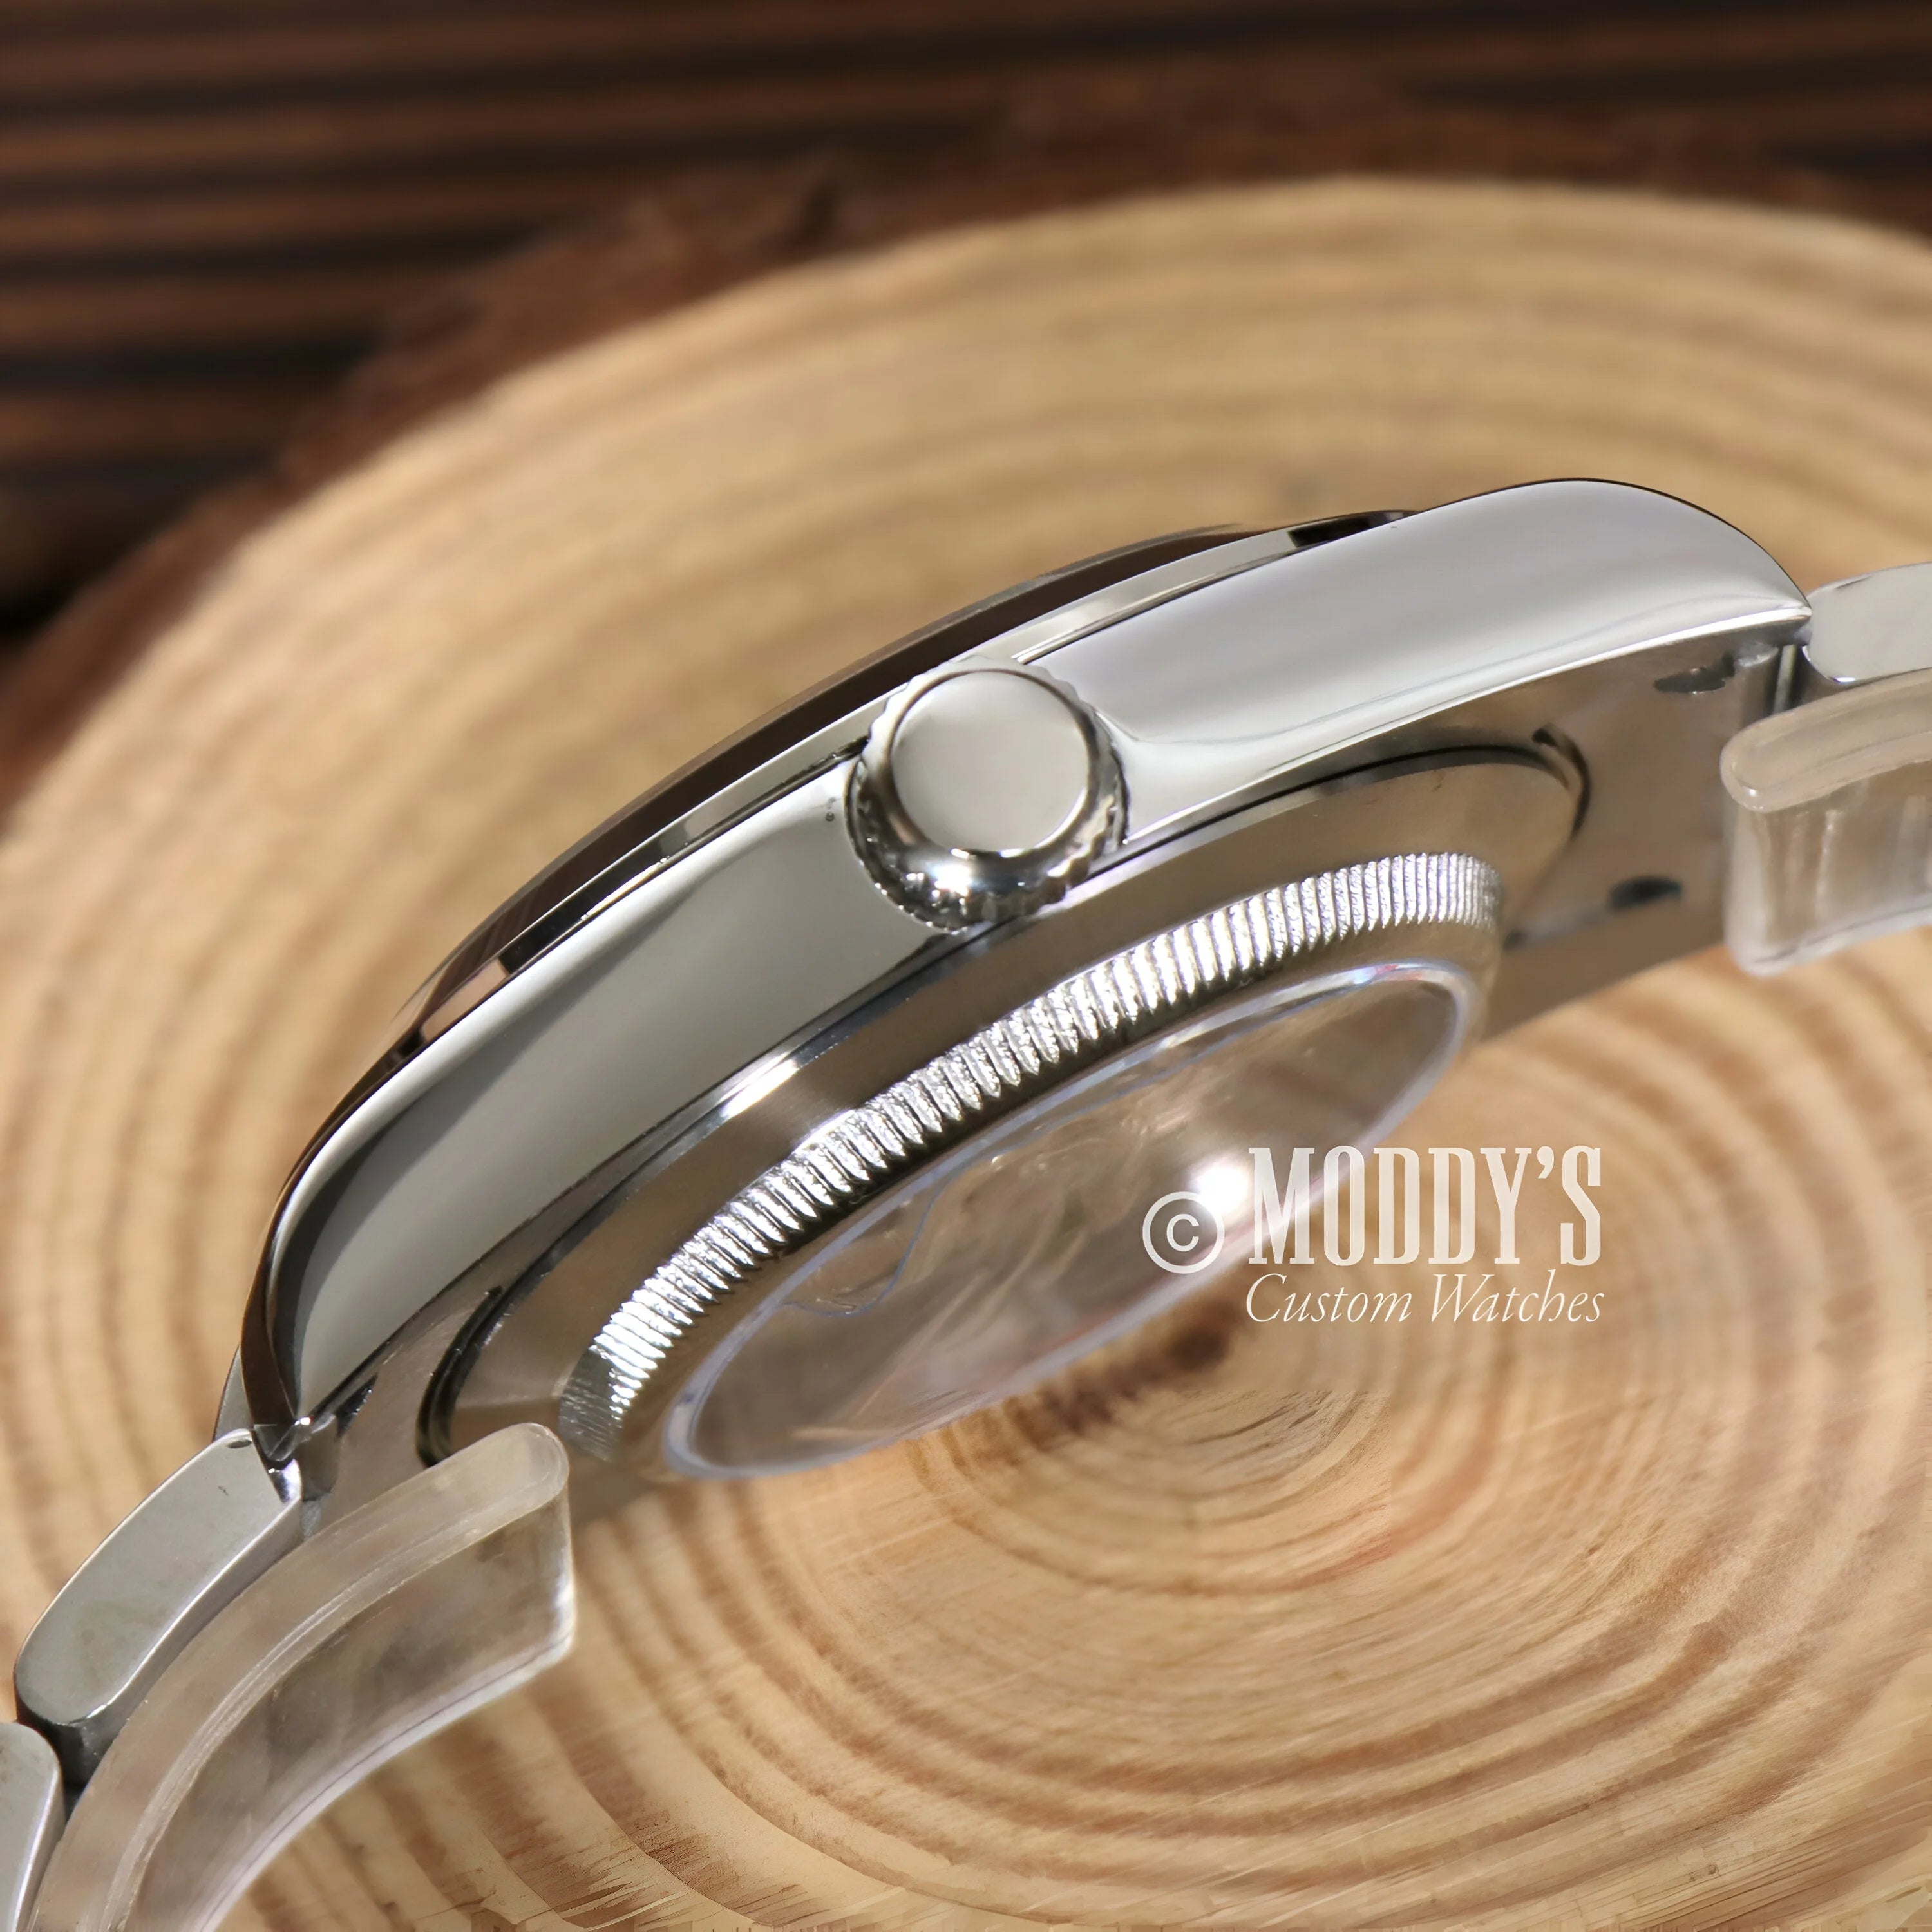 Sleek Silver Seiko Mod Oyster Wristwatch With Moddy’s Branding In Oysteiko Black Explorer